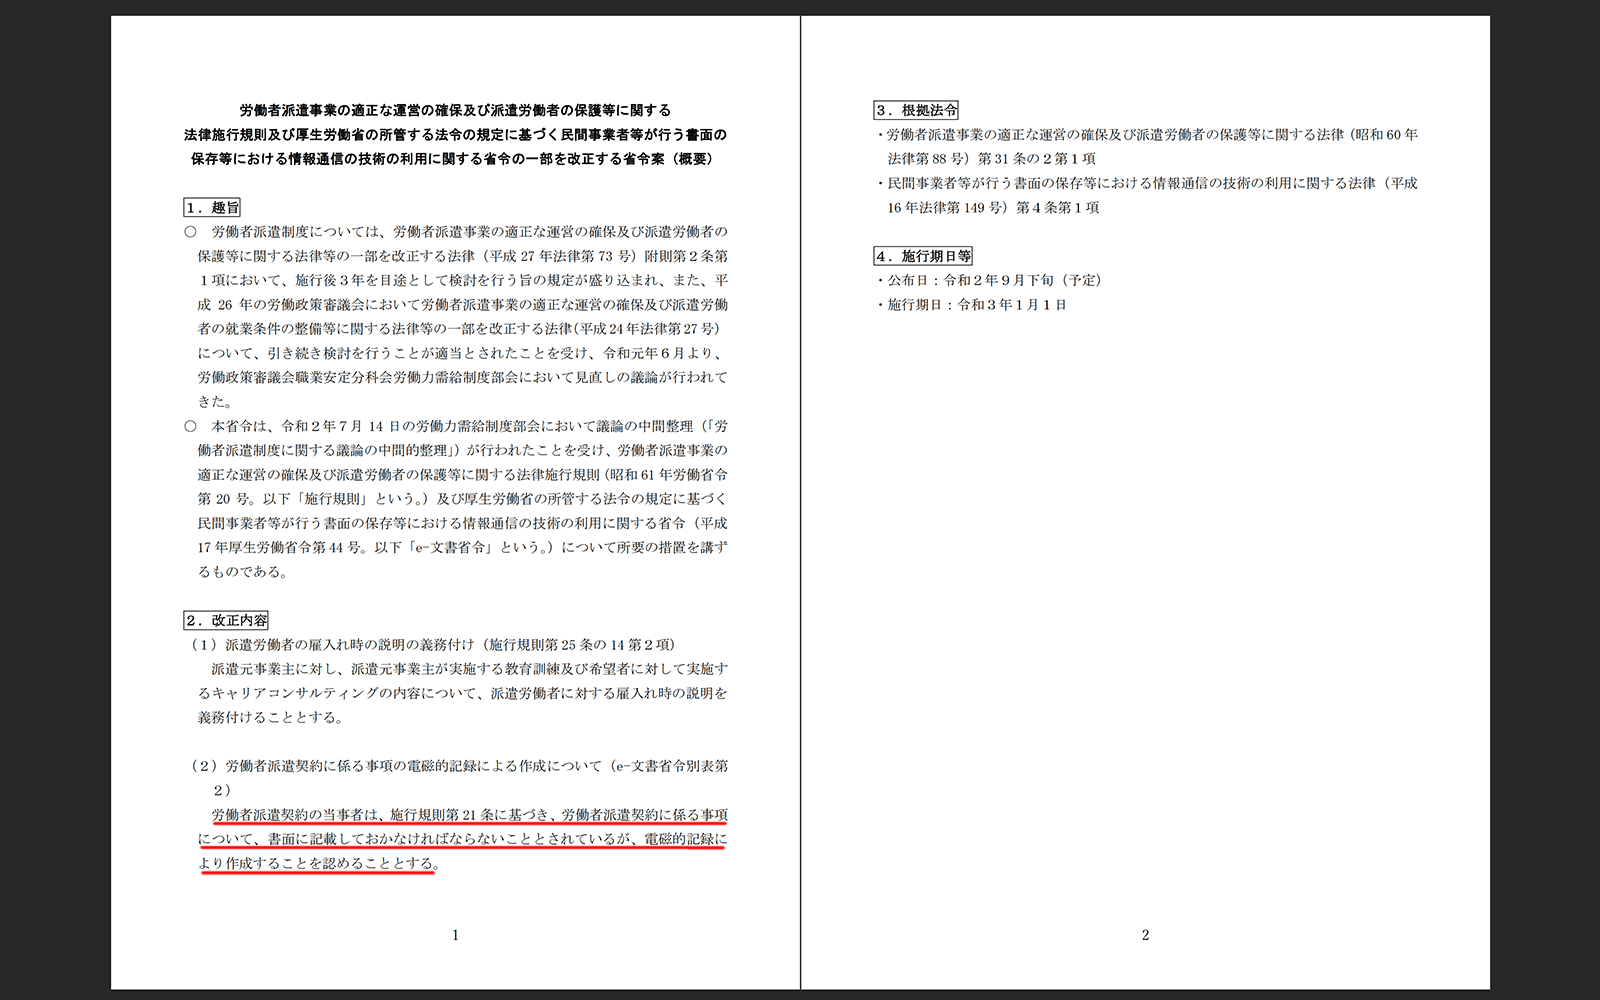 https://search.e-gov.go.jp/servlet/Public?CLASSNAME=PCMMSTDETAIL&id=495200188&Mode=0 2021年1月12日最終アクセス